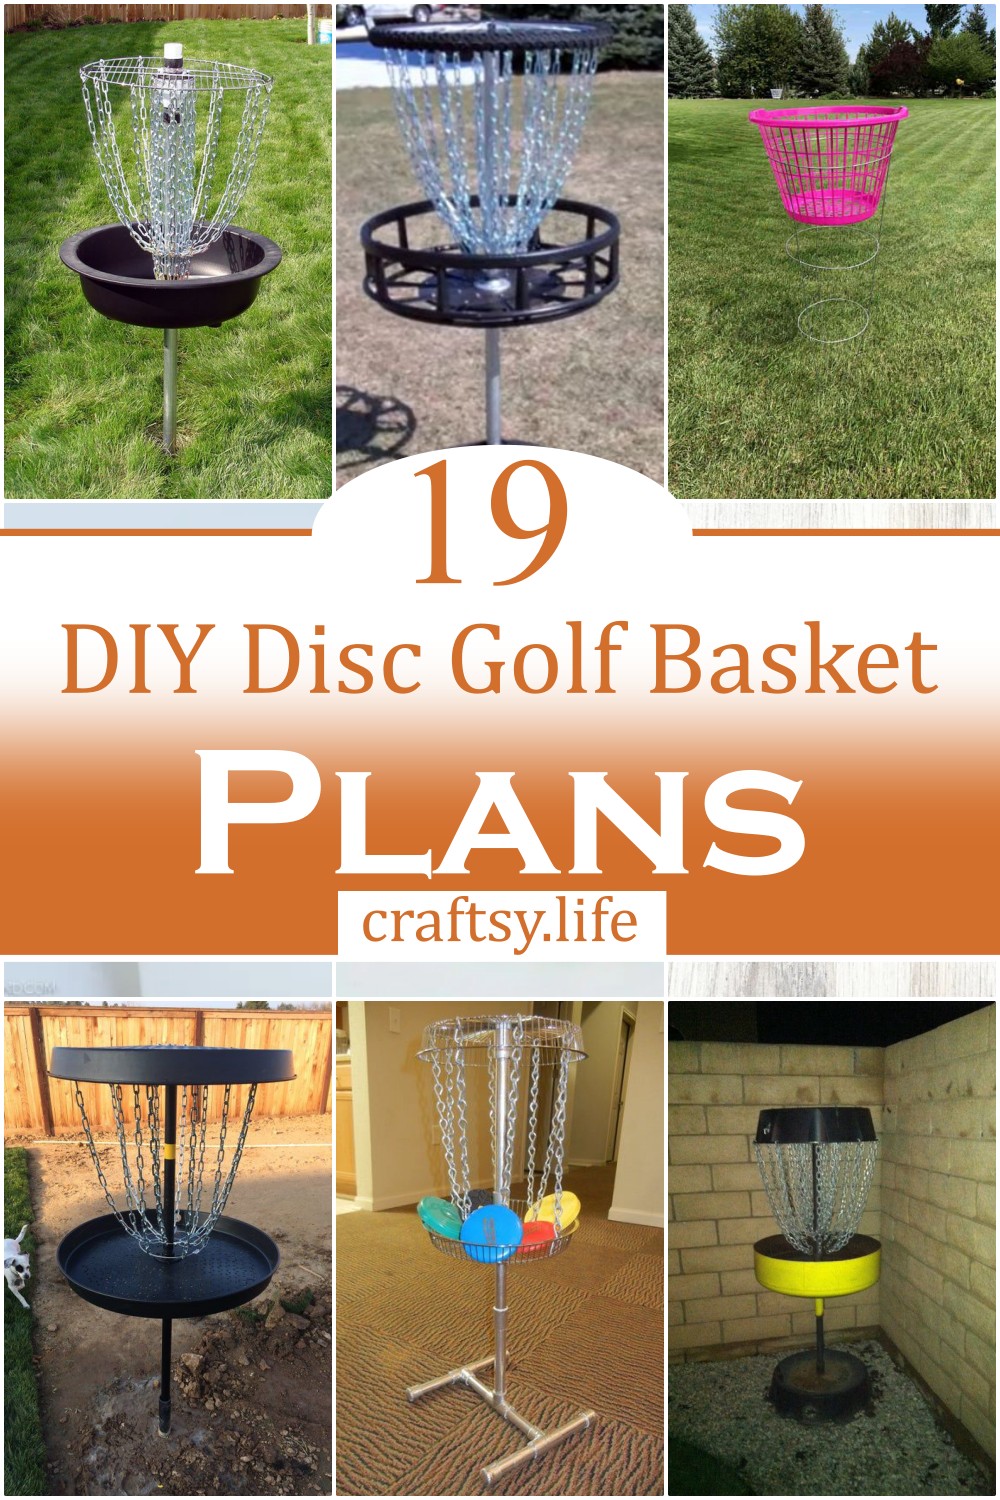 DIY Disc Golf Basket Plans